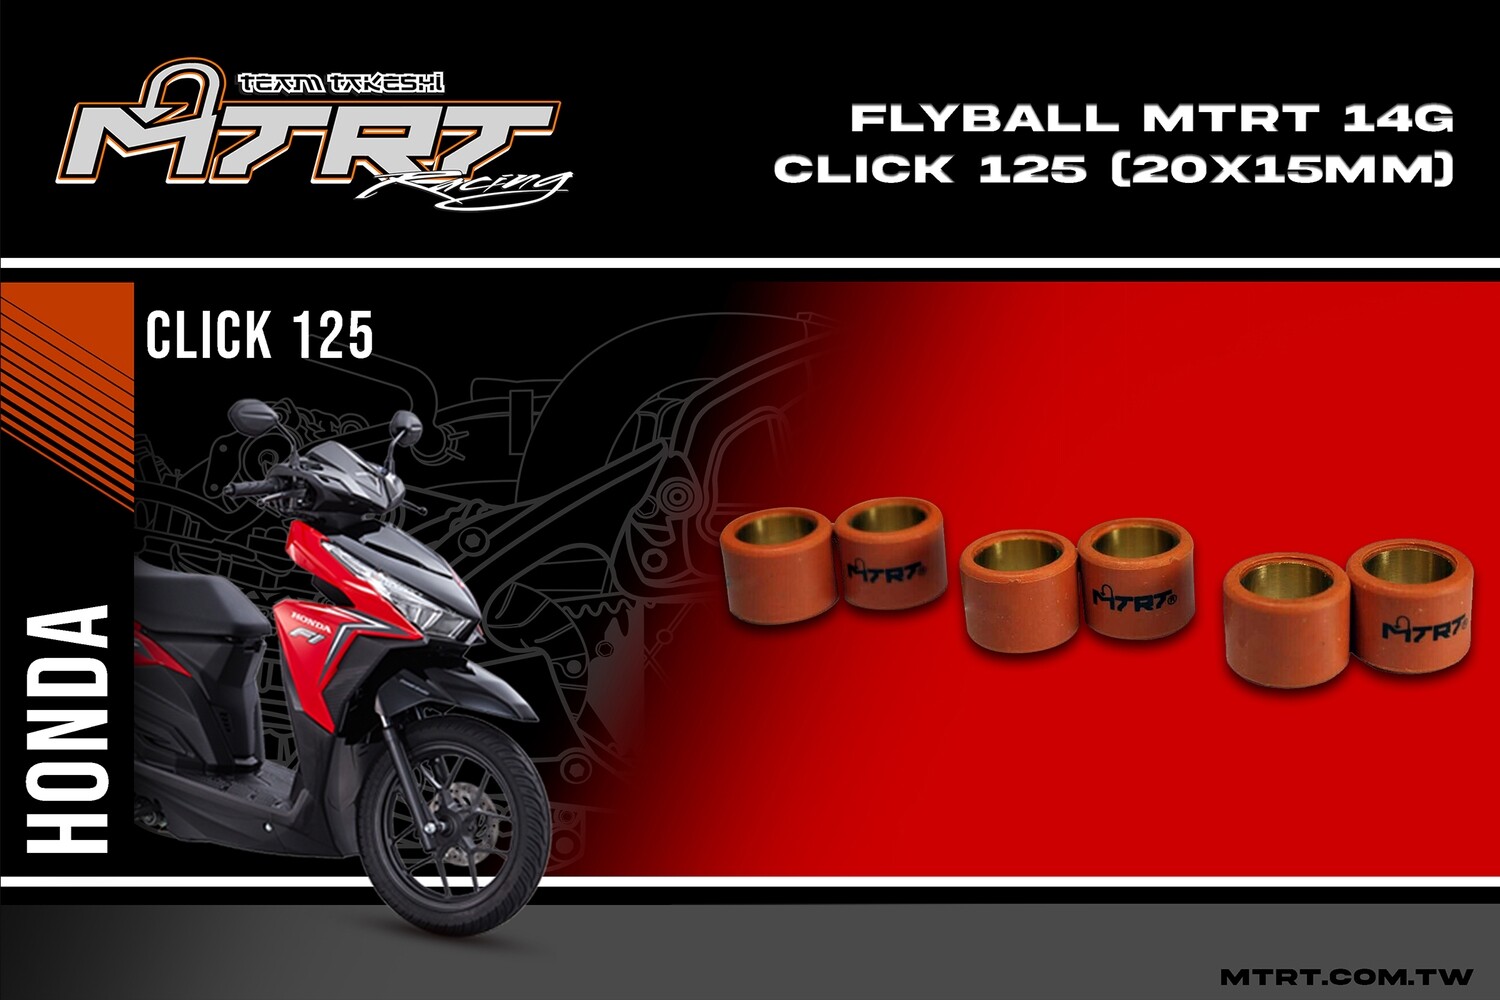 FLYBALL MTRT Click125DinkStepRV 14G (20x15mm)